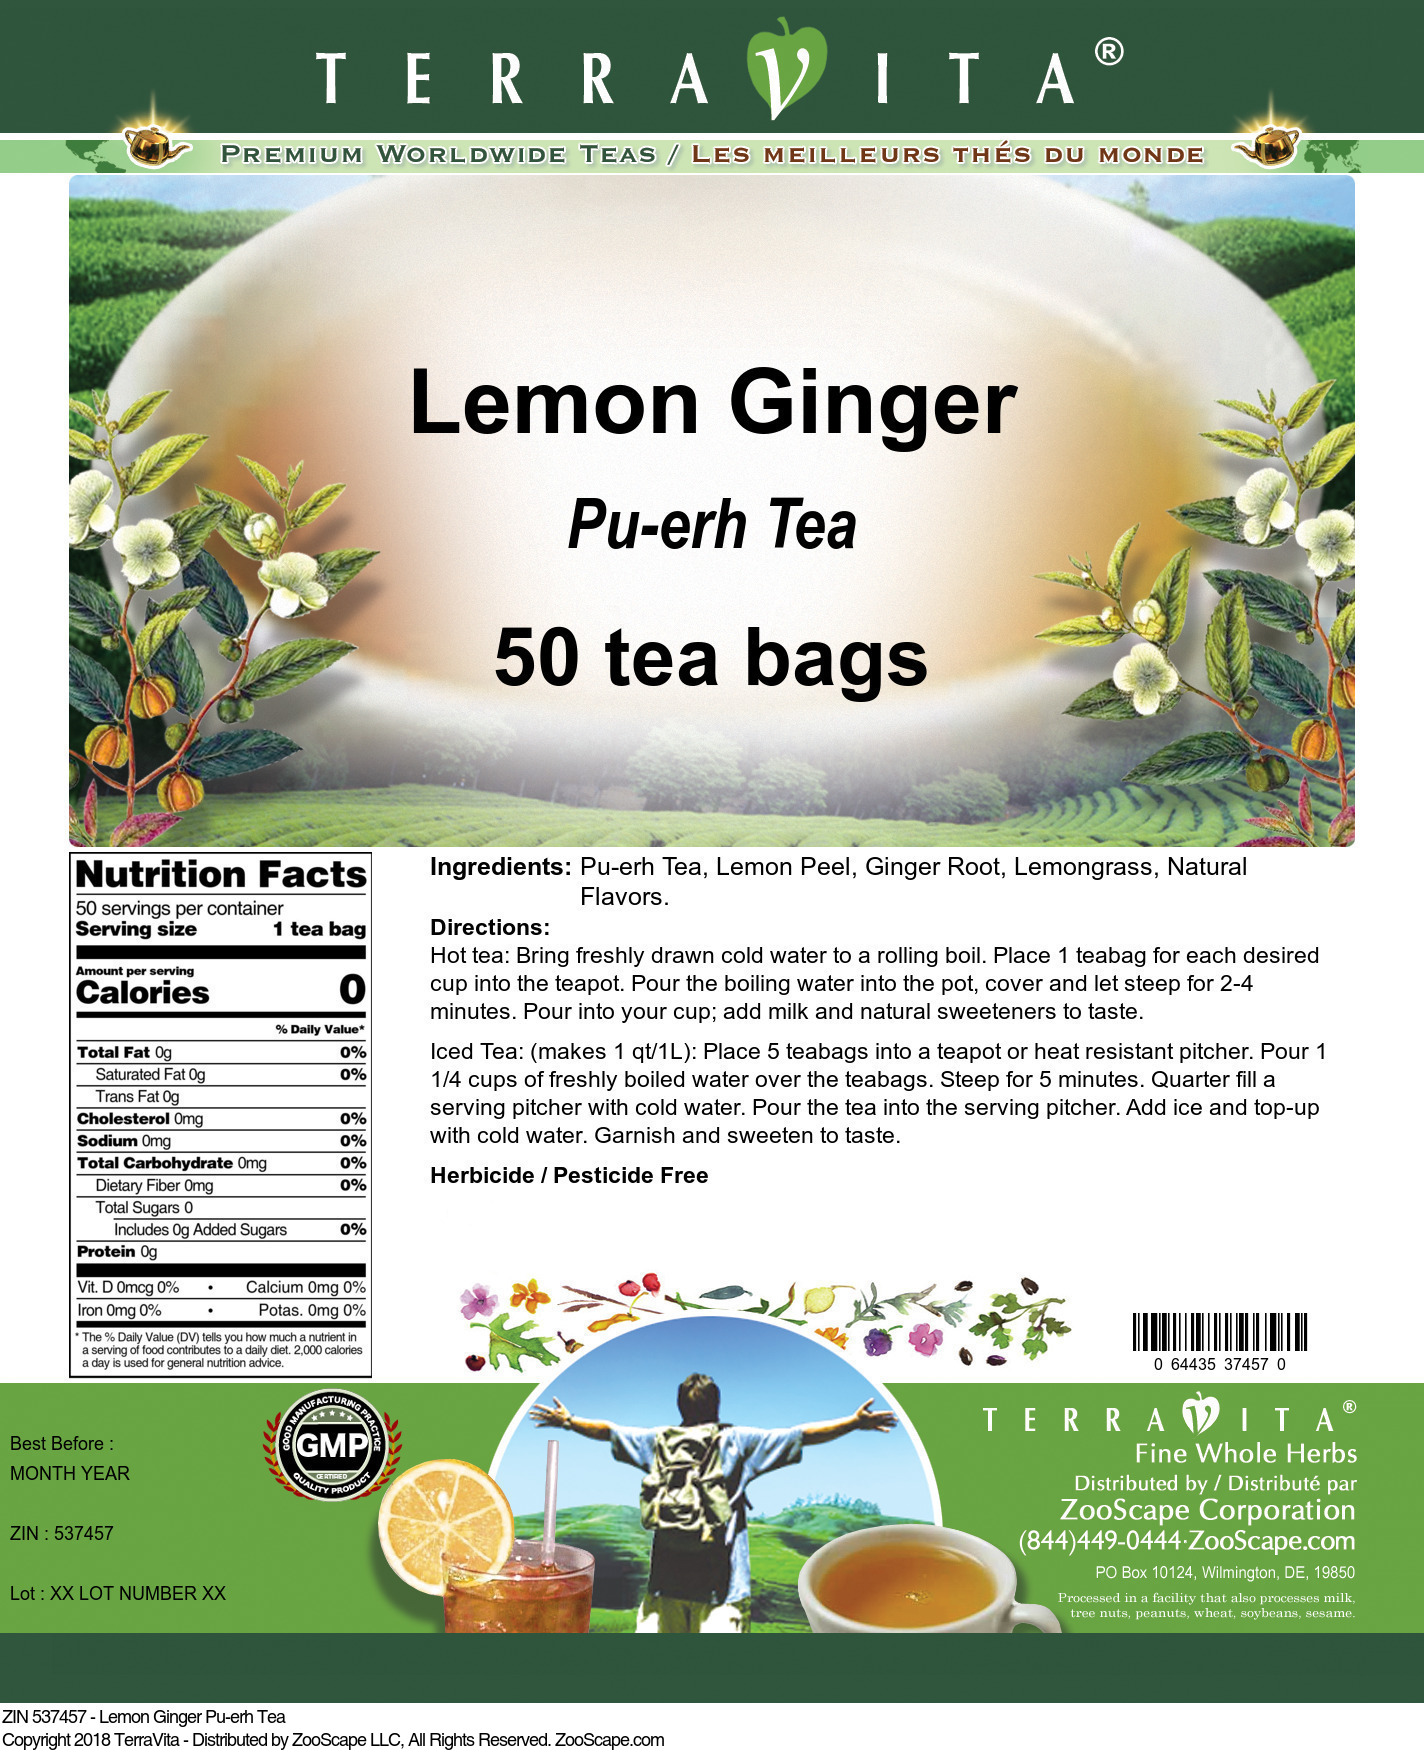 Lemon Ginger Pu-erh Tea - Label